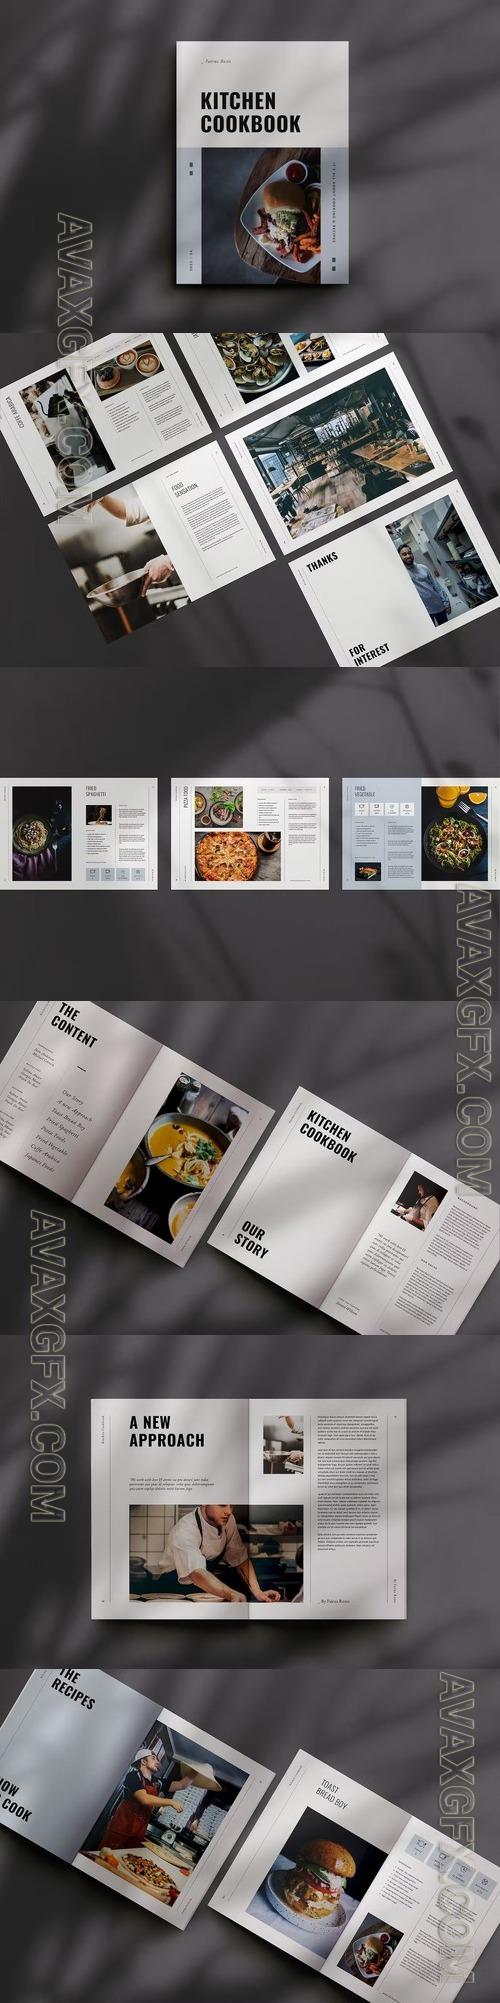 CookBook | Recipe Book VZG24DN